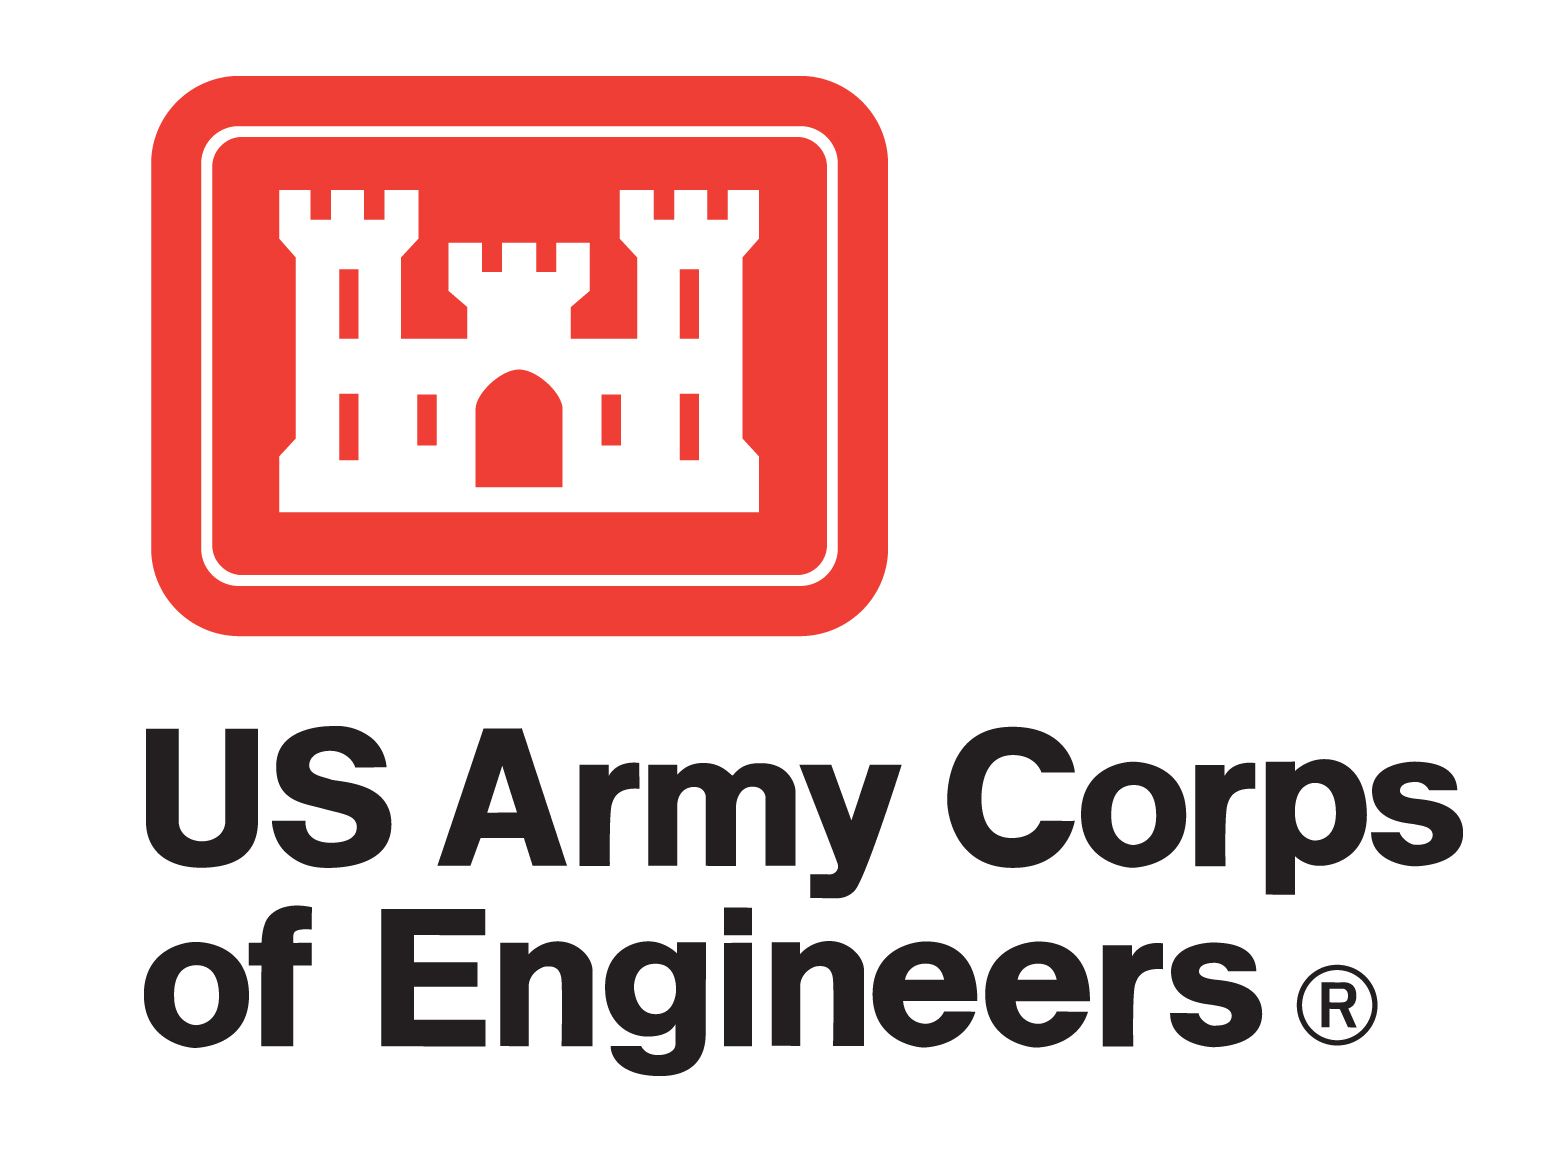 The U.S. Army Corps of Engineers